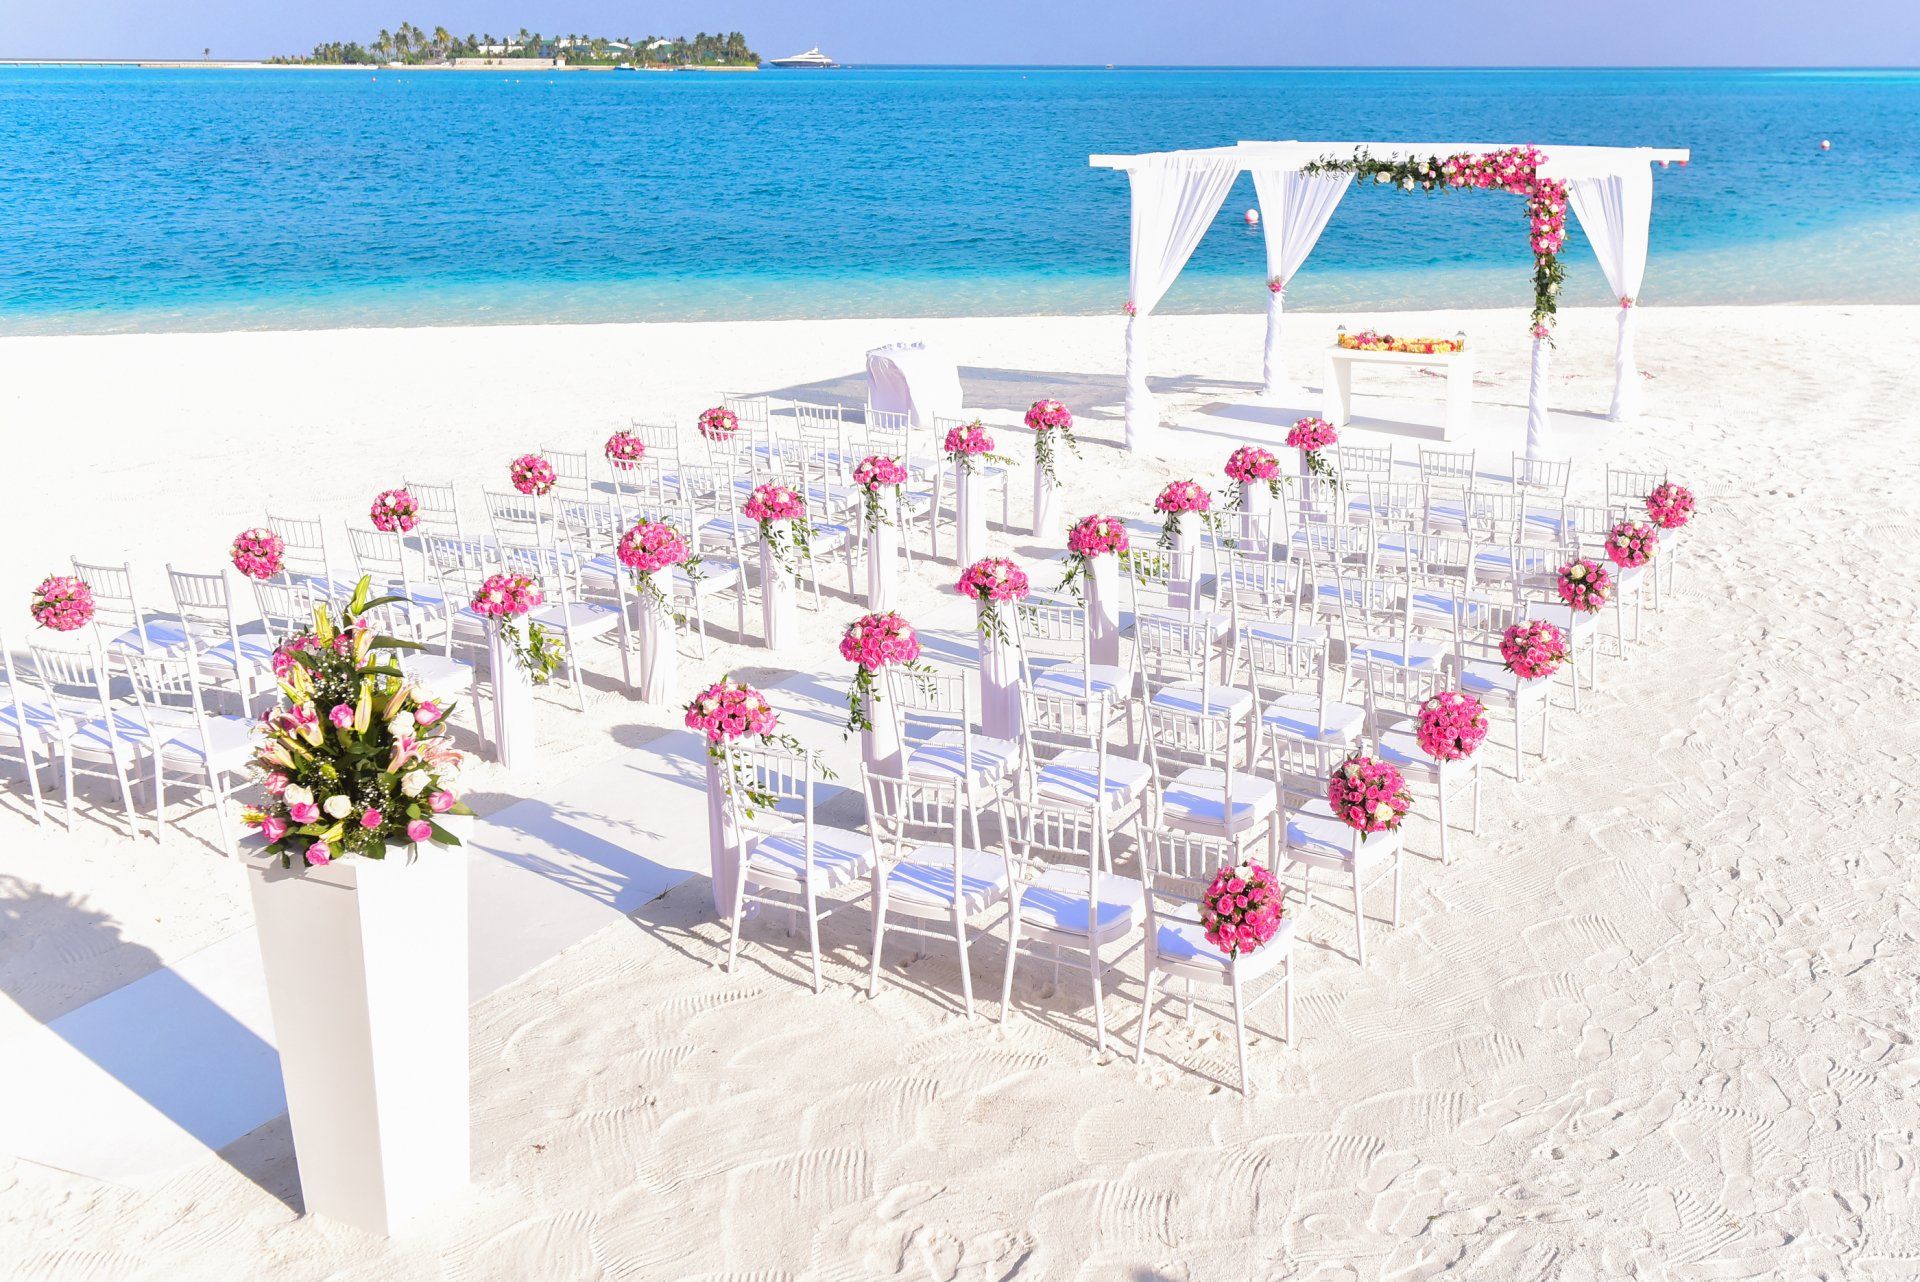 A wedding ceremony on the beach
